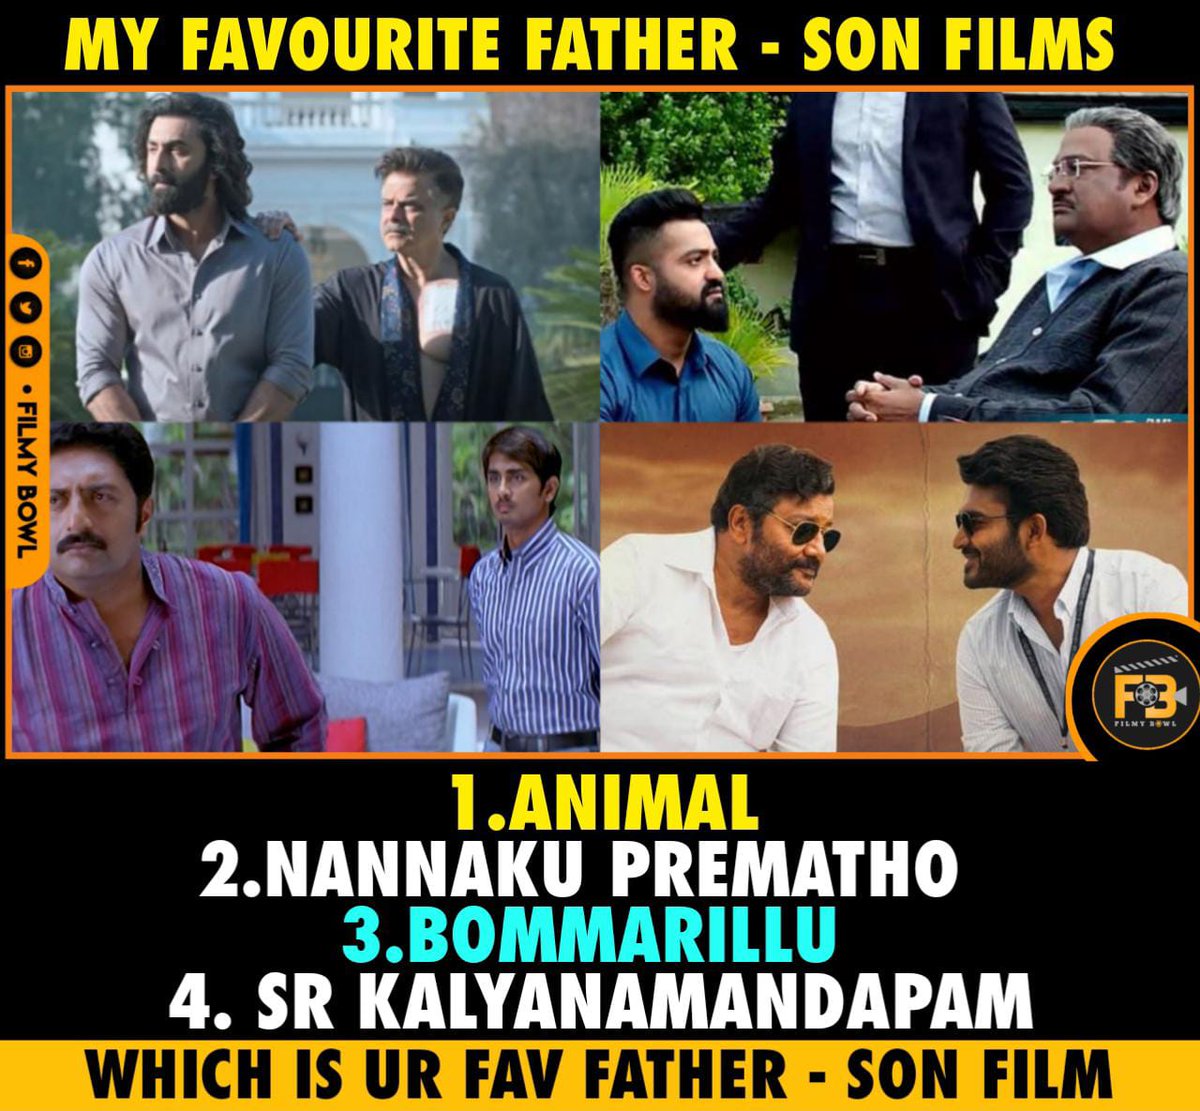 My favourite father - son films 

#Bommarillu
#Animal 
#Nannakuprematho
#SRkalyanamandapam

Which is ur fav father - son film 👇👇